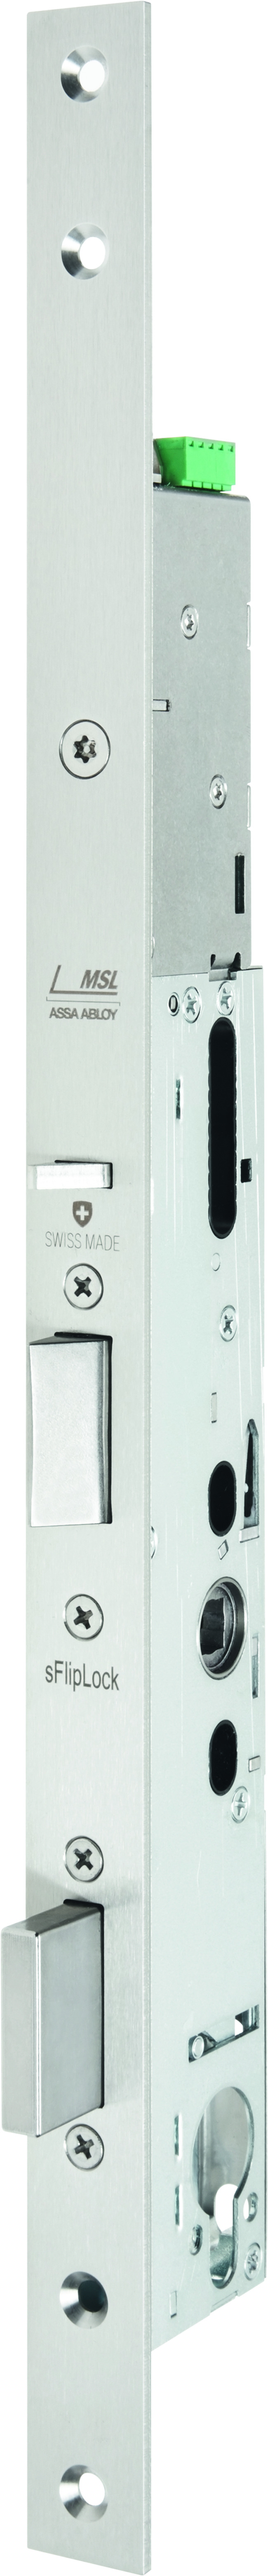 sFlipLock drive panic security mortise lock, motorised 15544PE-SV